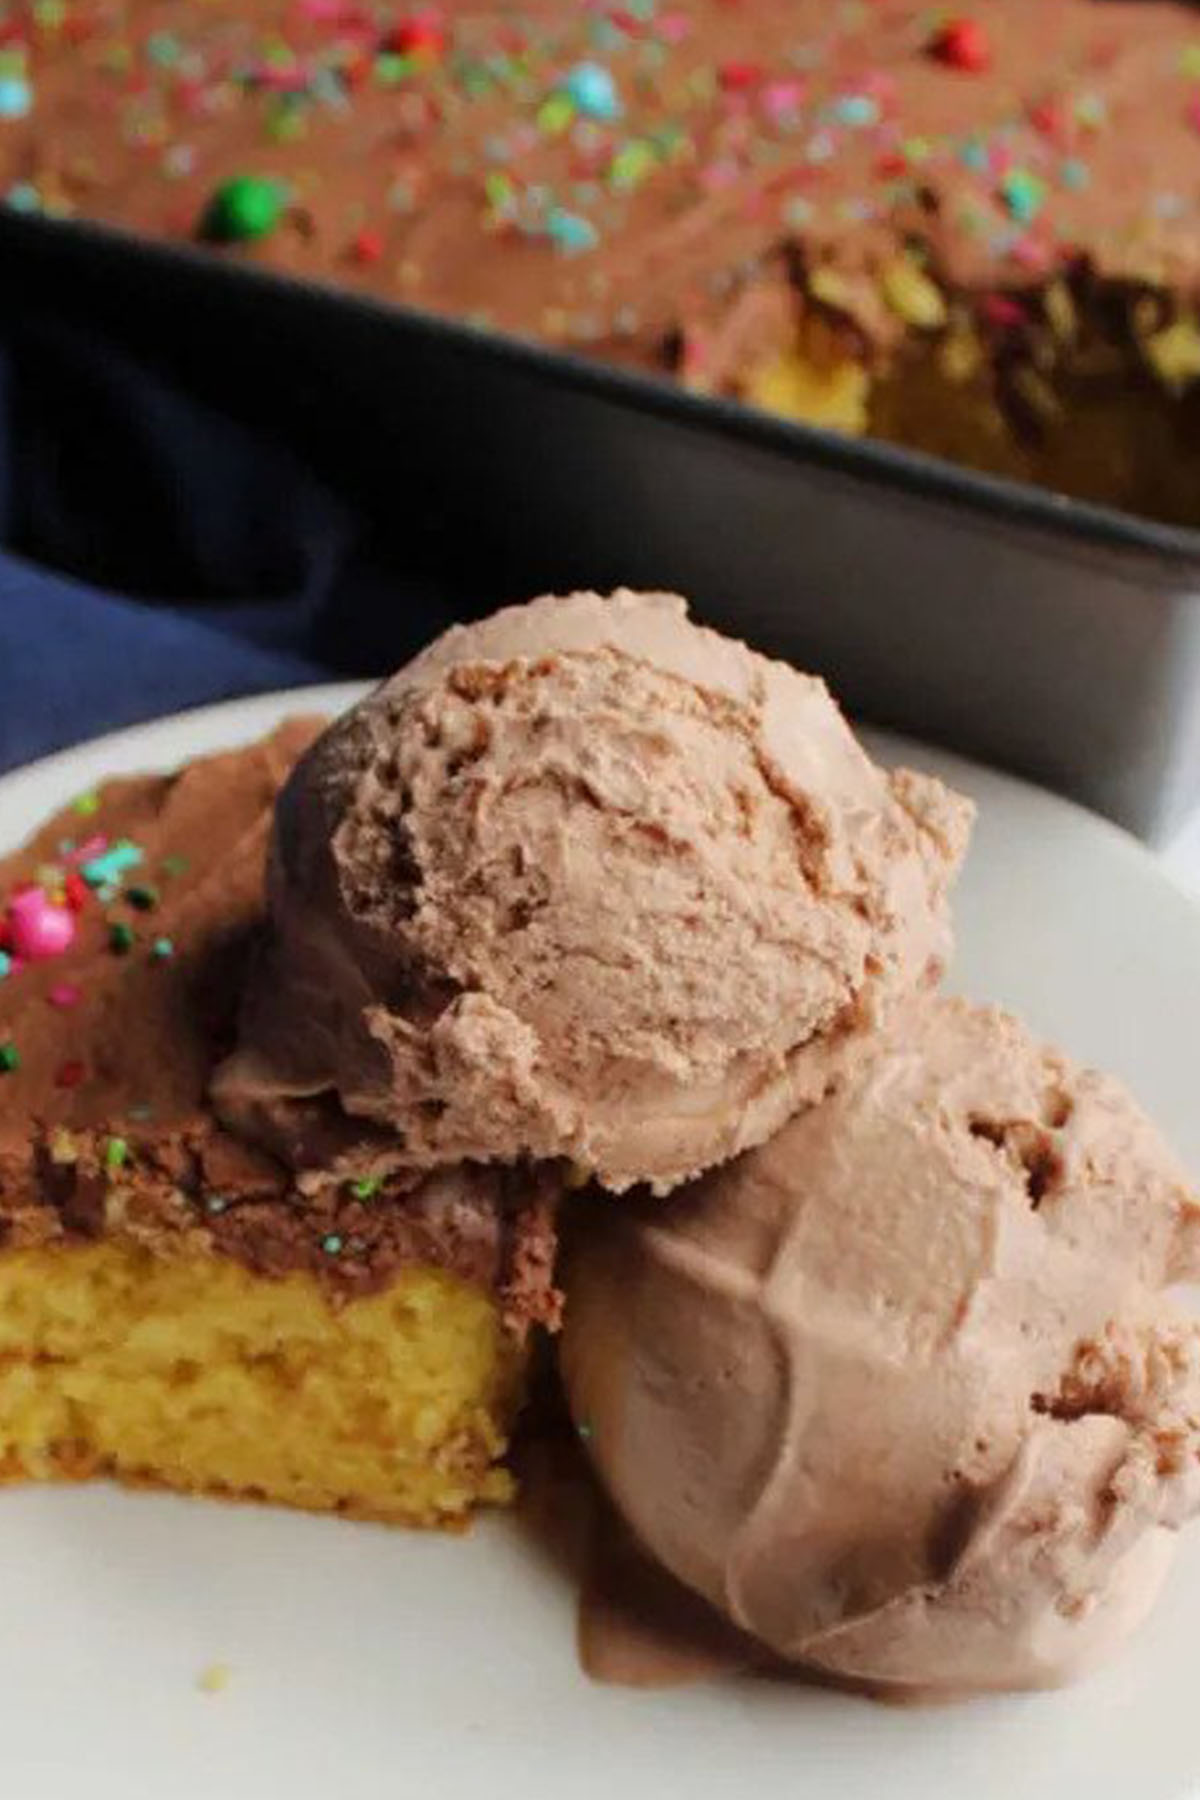 chocolate ice cream next to a piece of cake.